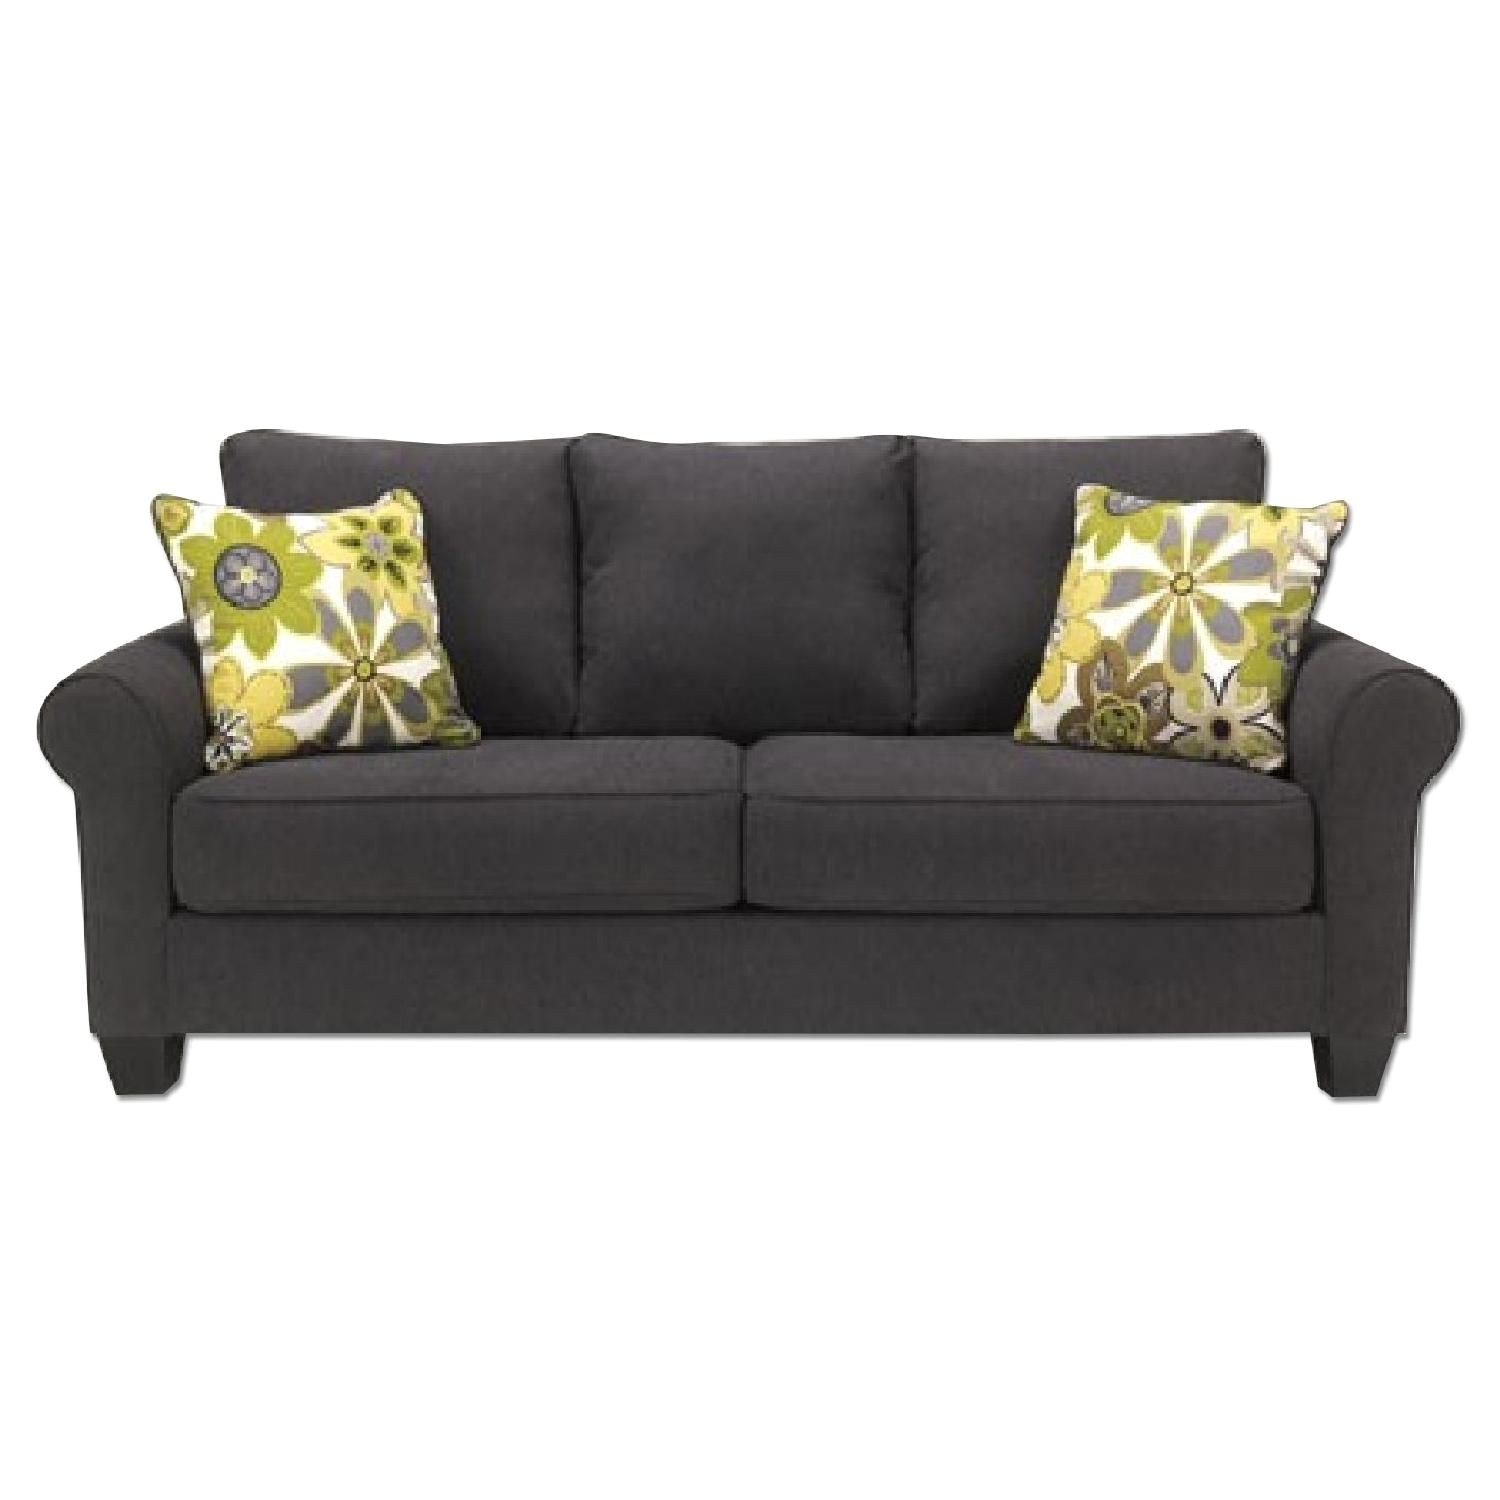 Craigslist orlando sofa and Loveseat ashley Nolana Queen Sleeper sofa 4 Available Sleeper sofas and